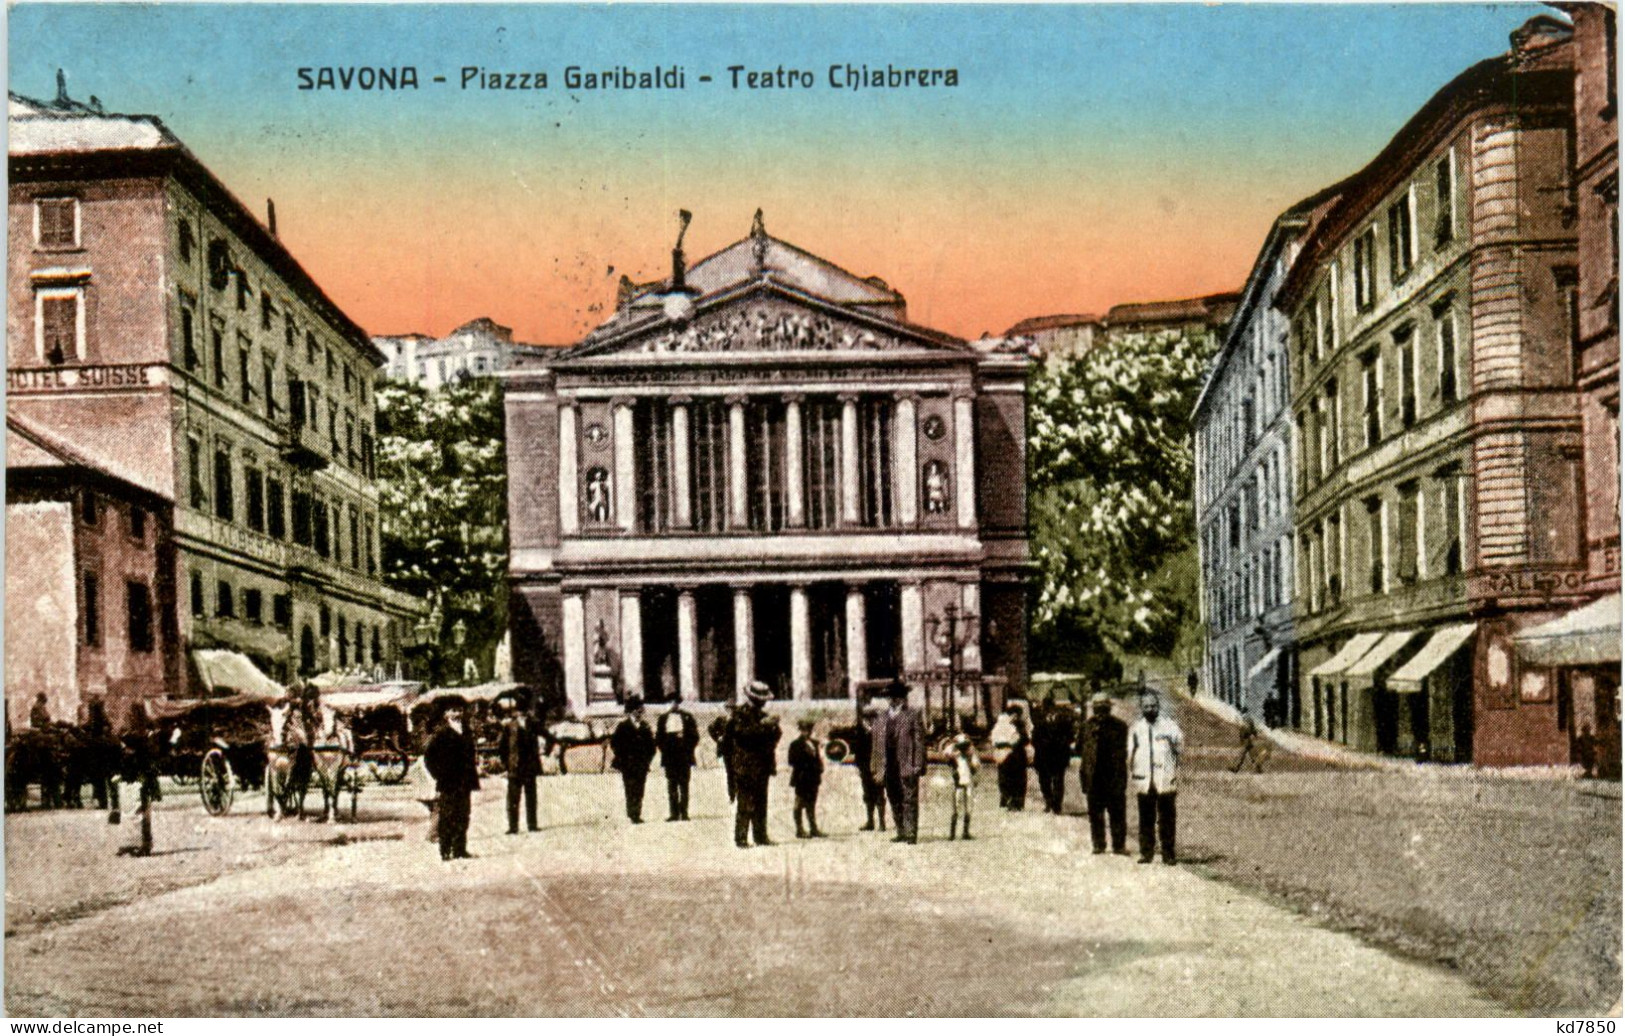 Savona - Piazza Garibaldi - Savona